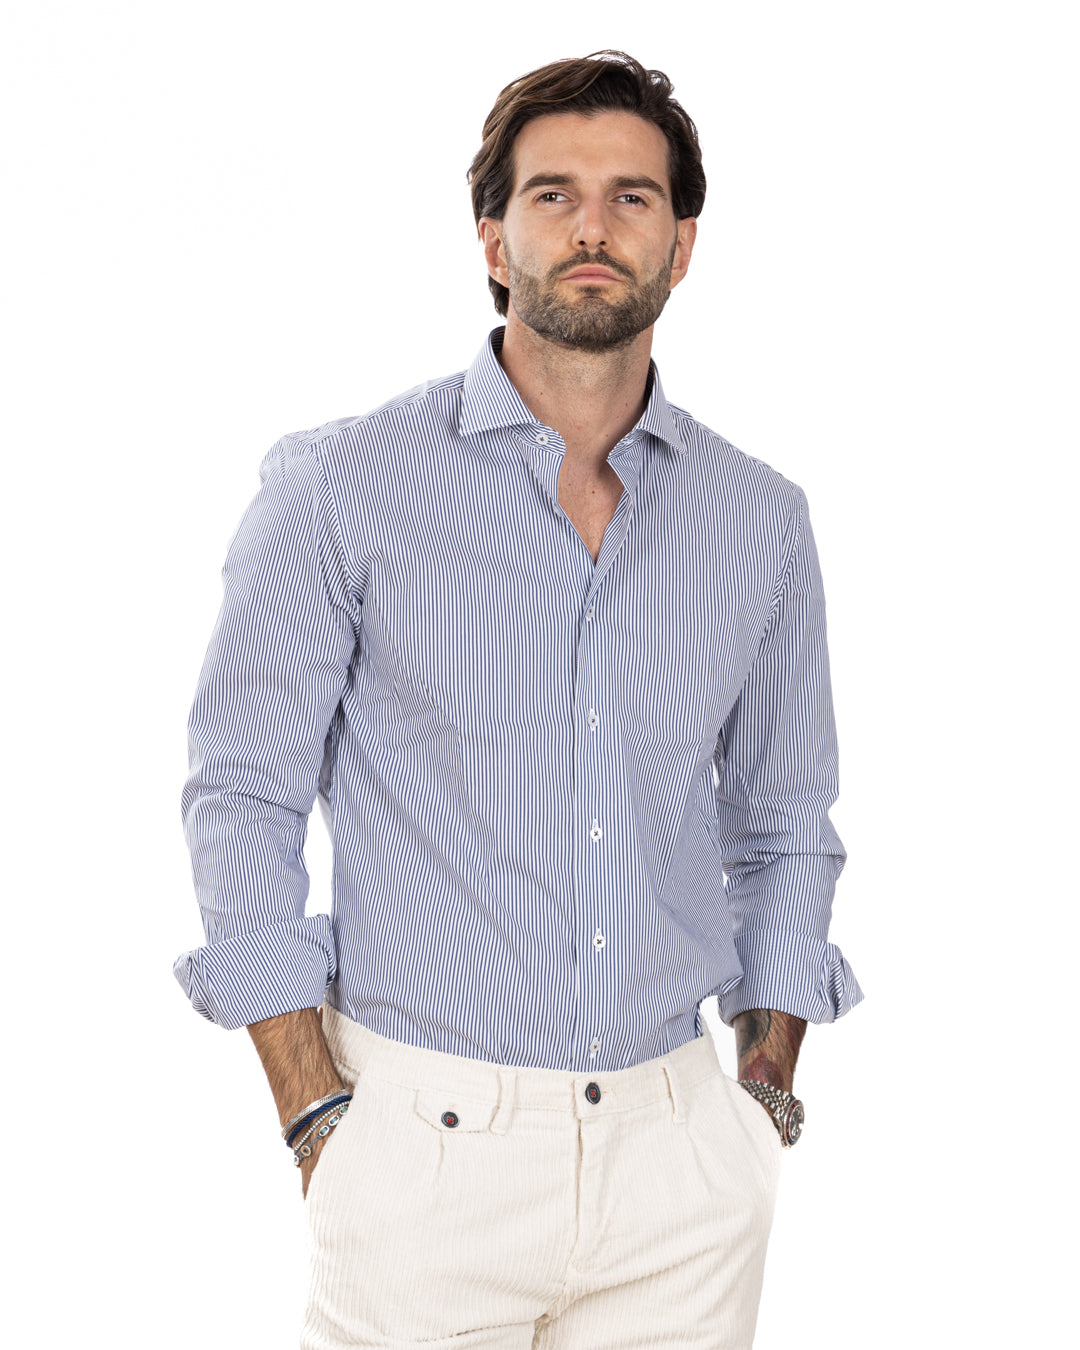 Shirt - basic classic light blue narrow stripe in cotton